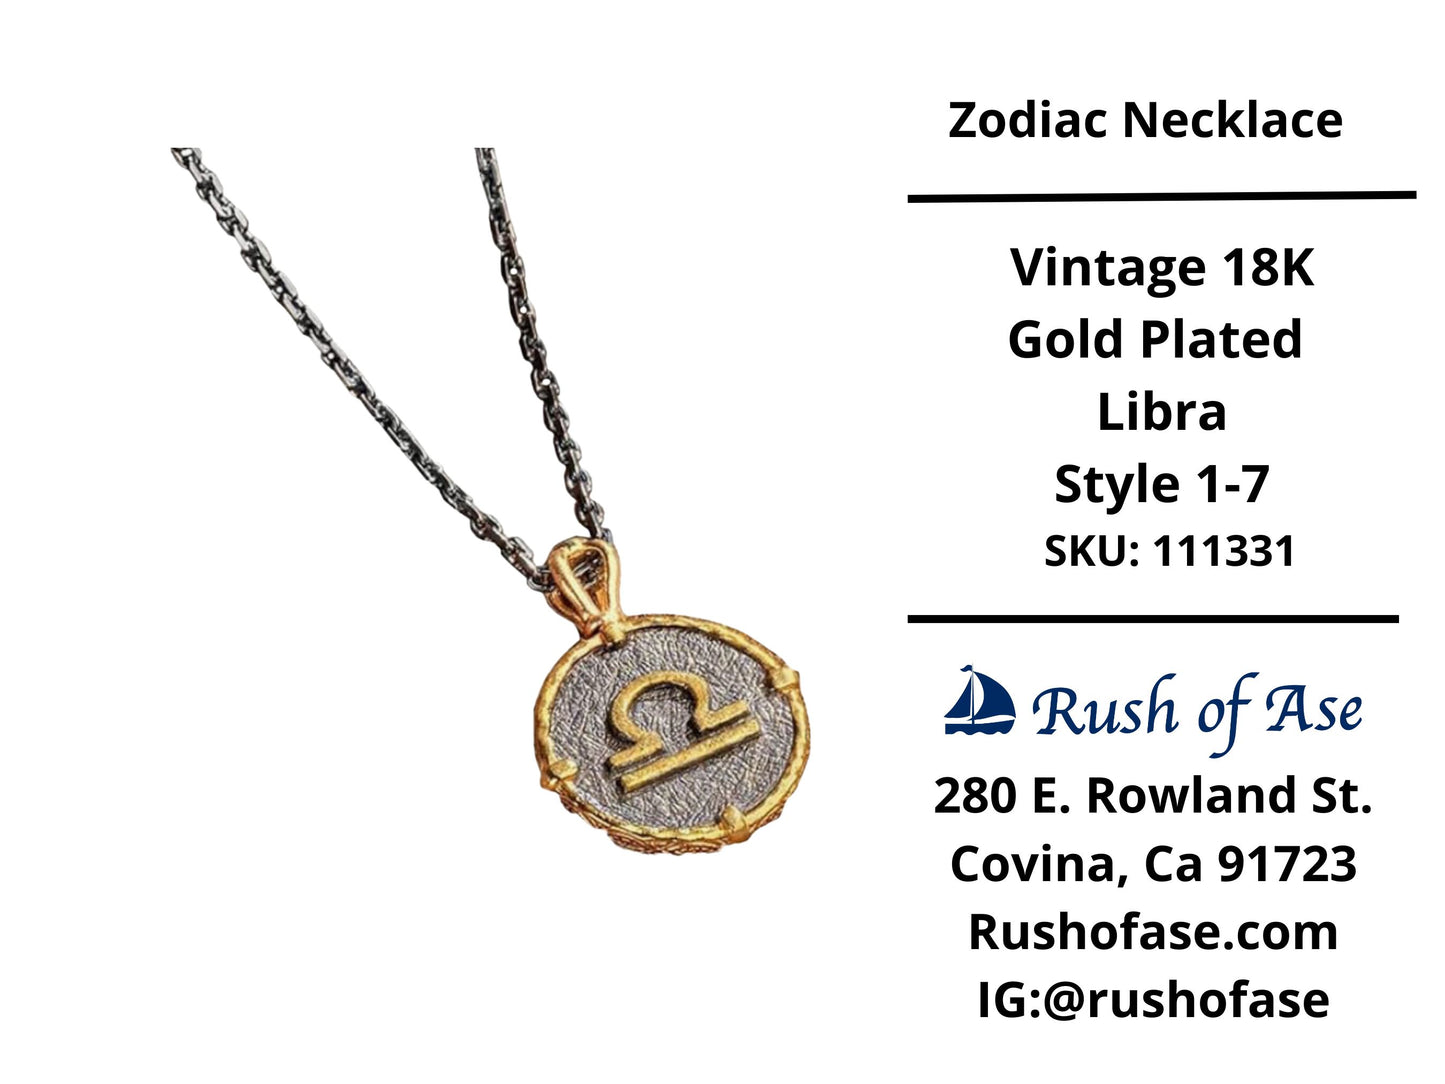 Necklace | Zodiac Necklaces | Vintage 18K Gold